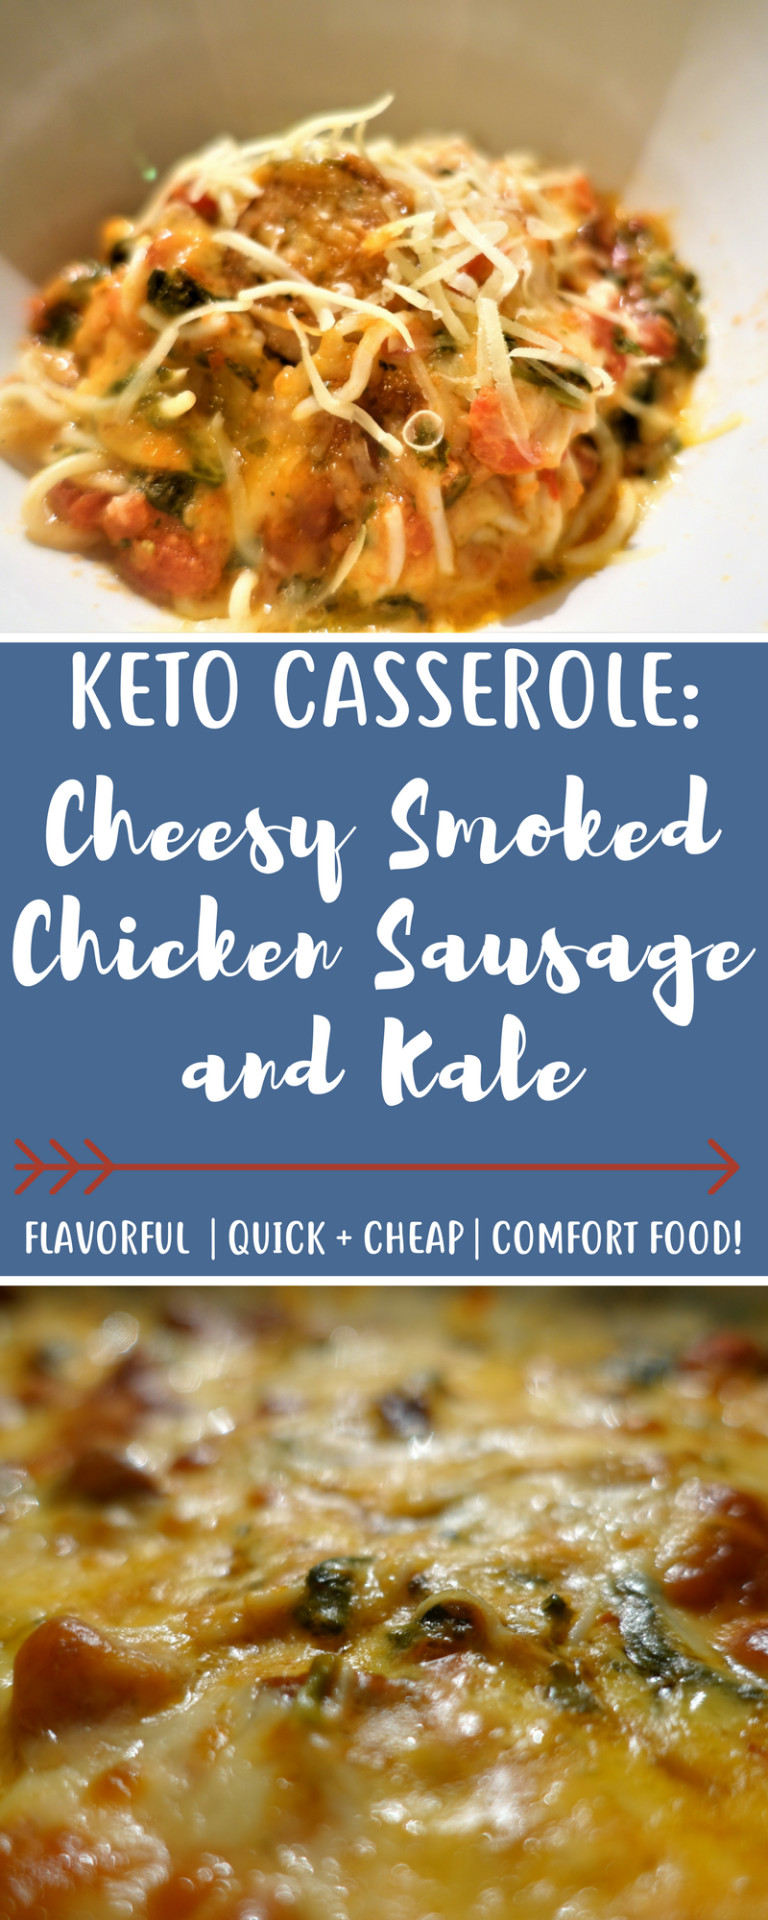 Clean Keto Casserole Recipes
 Keto Cheesy Smoked Chicken Sausage Kale Casserole